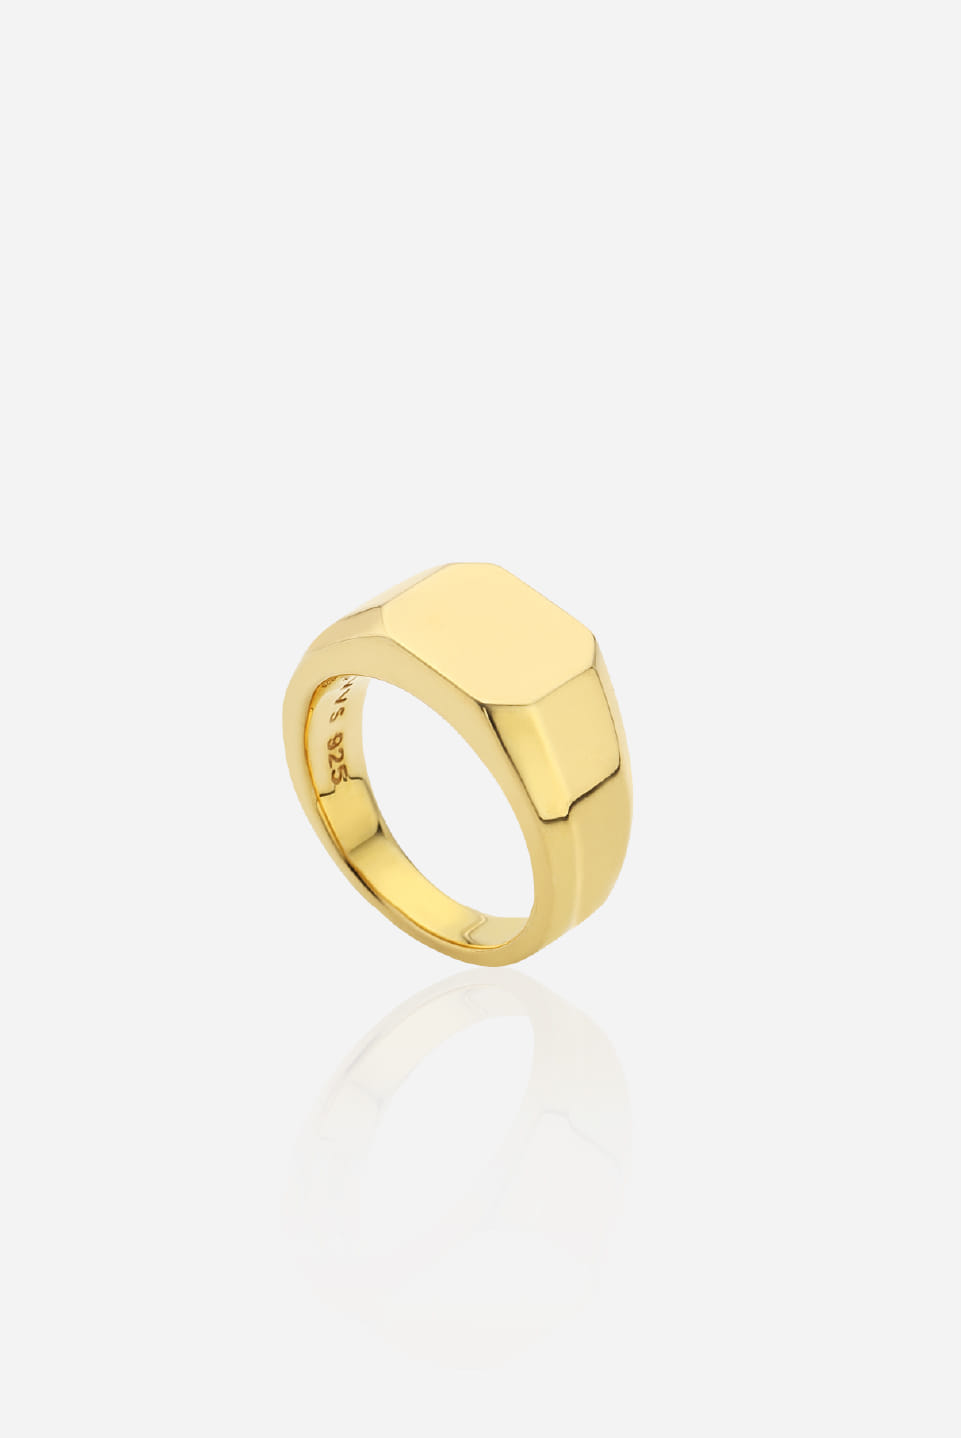 Ravenna Signet Ring in Gold